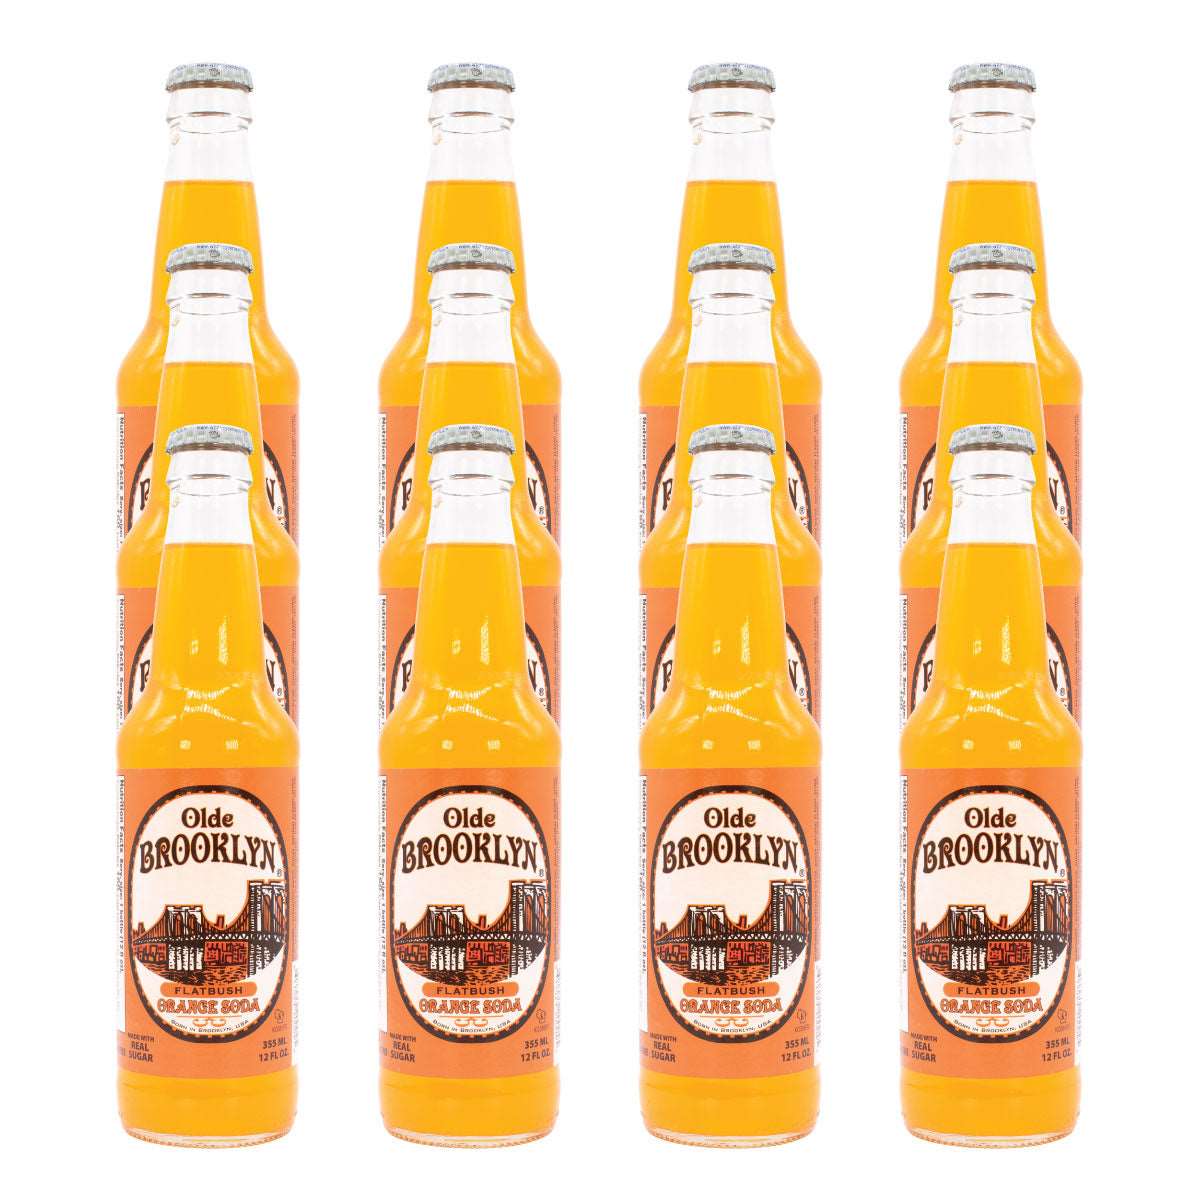 Olde Brooklyn Flatbush Orange Soda 12 Pack